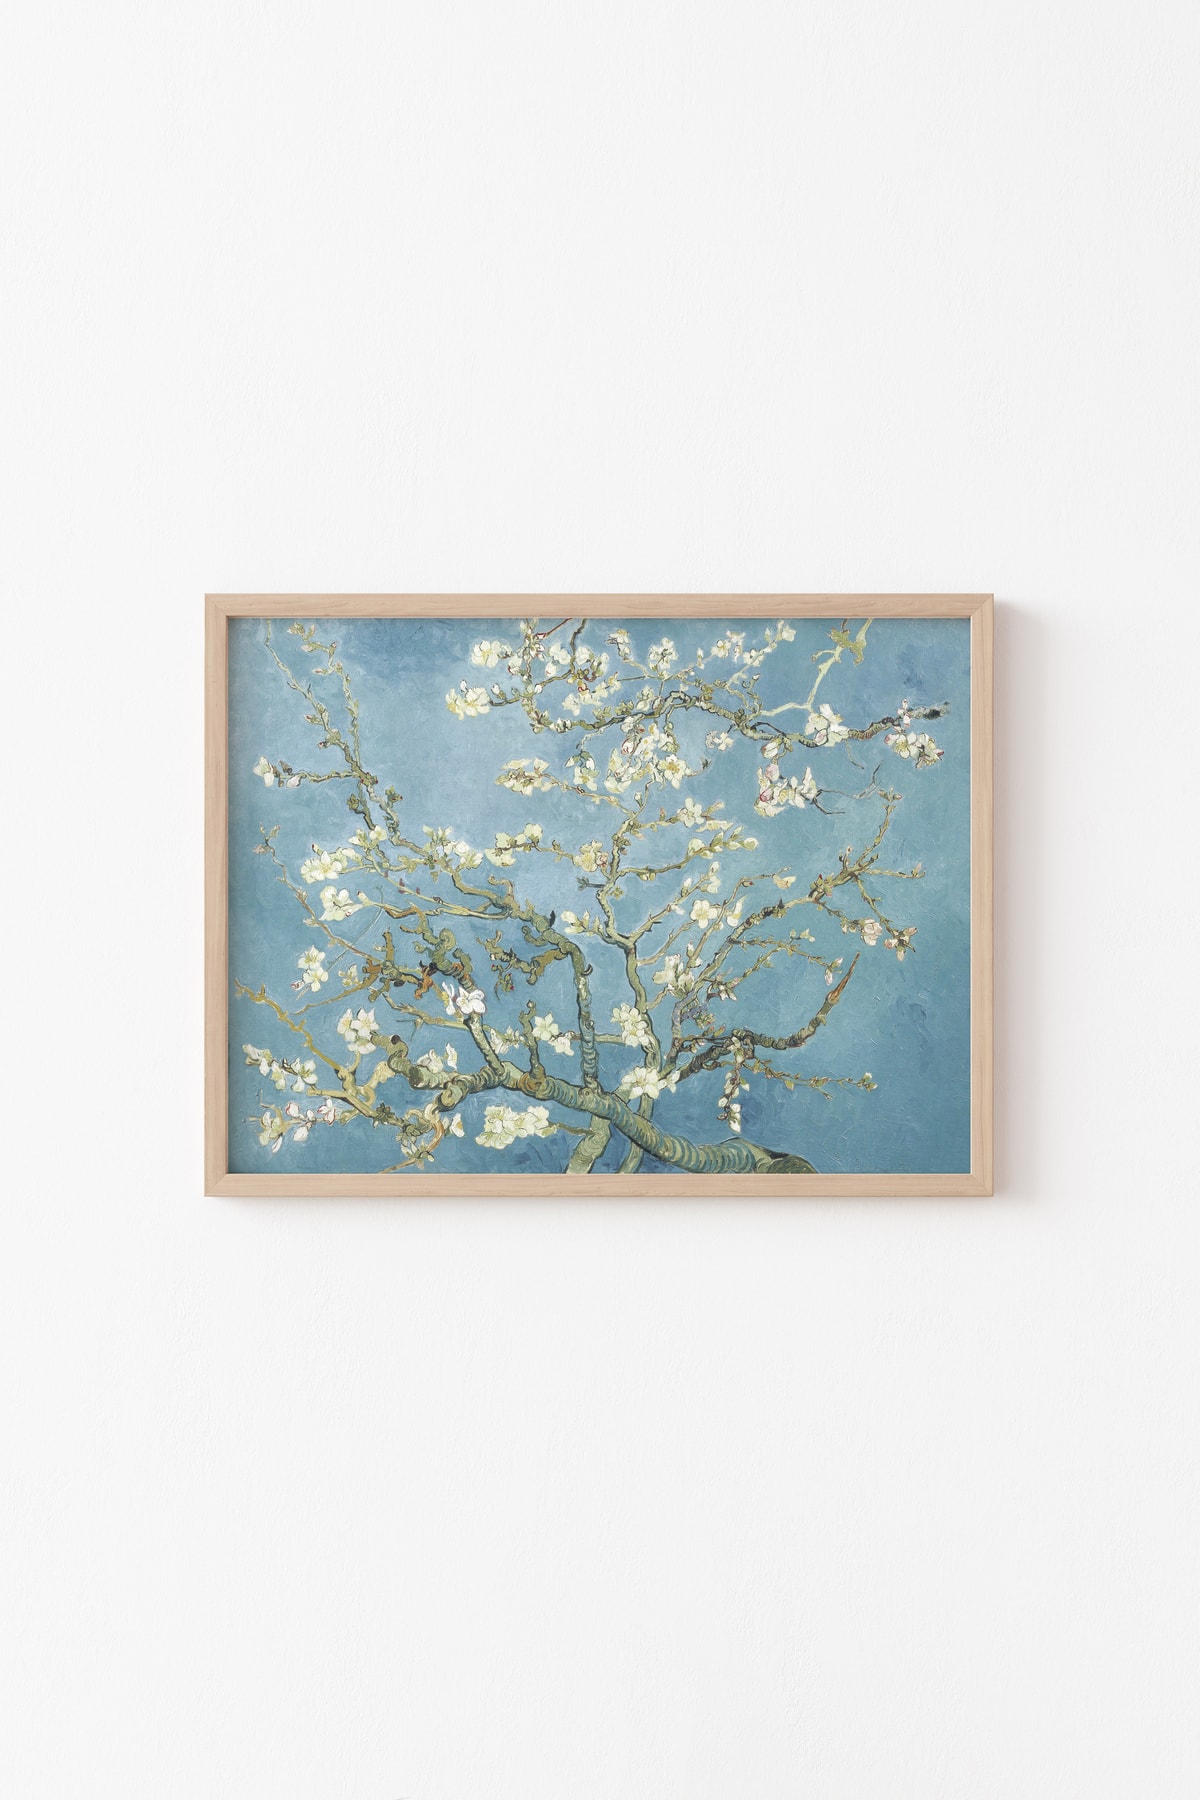 epiqart Badem Çiçeği - Vincent Van Gogh - Ahşap Çerçeve